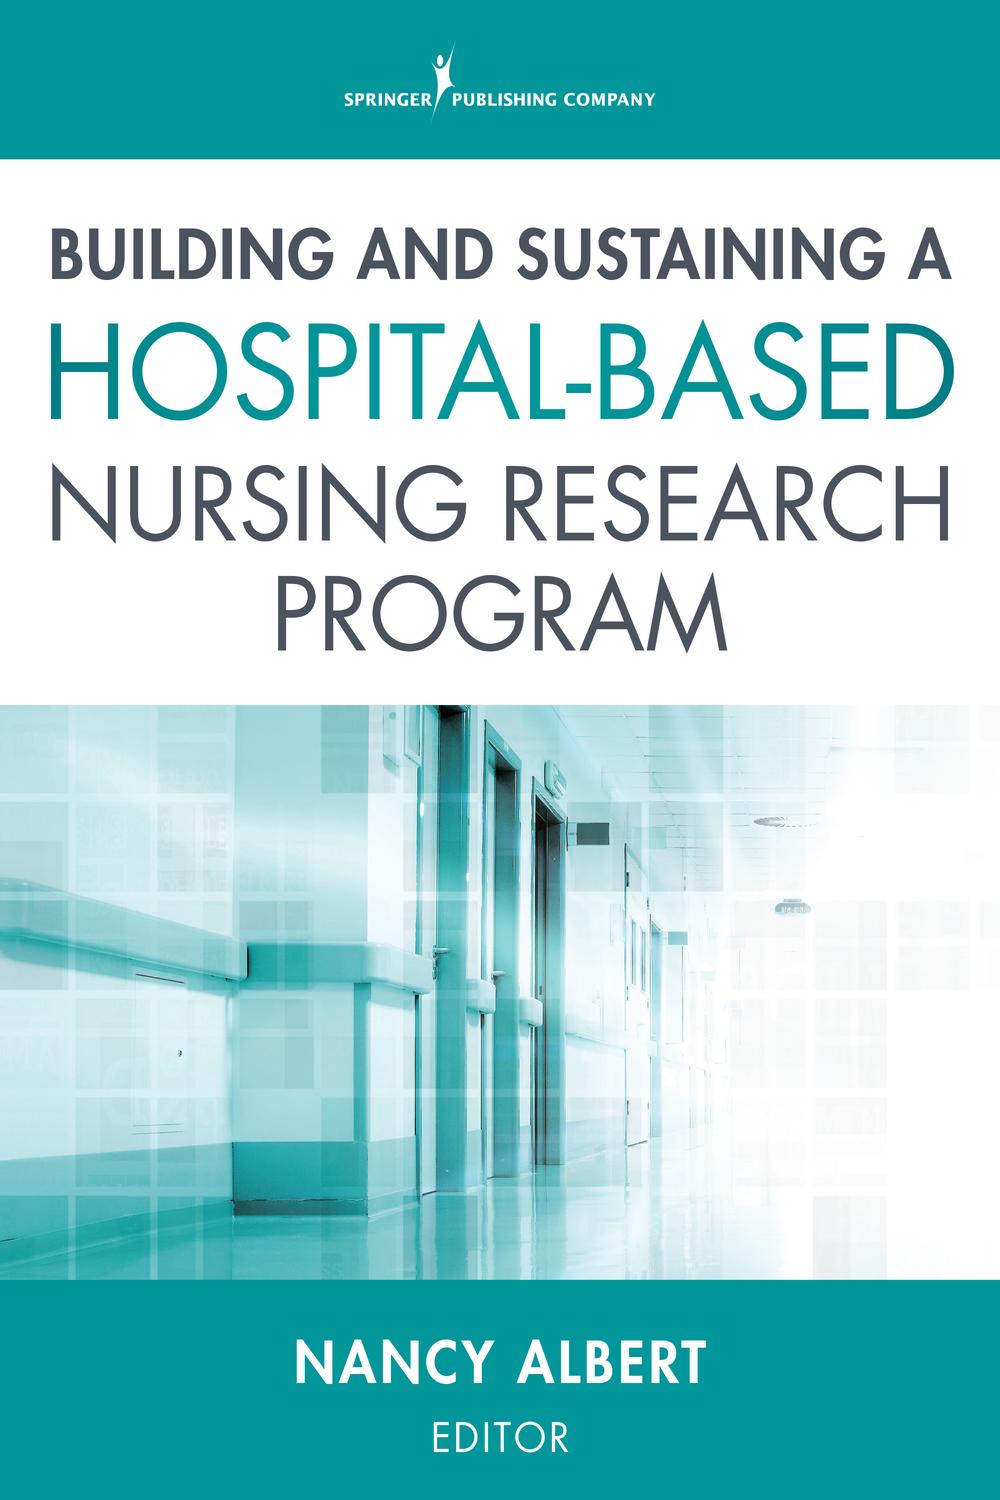 Building and Sustaining a Hospital-Based Nursing Research Program - Dr. Nancy Albert, PhD, CCNS, CCRN, NE-BC, FAHA, FCCM